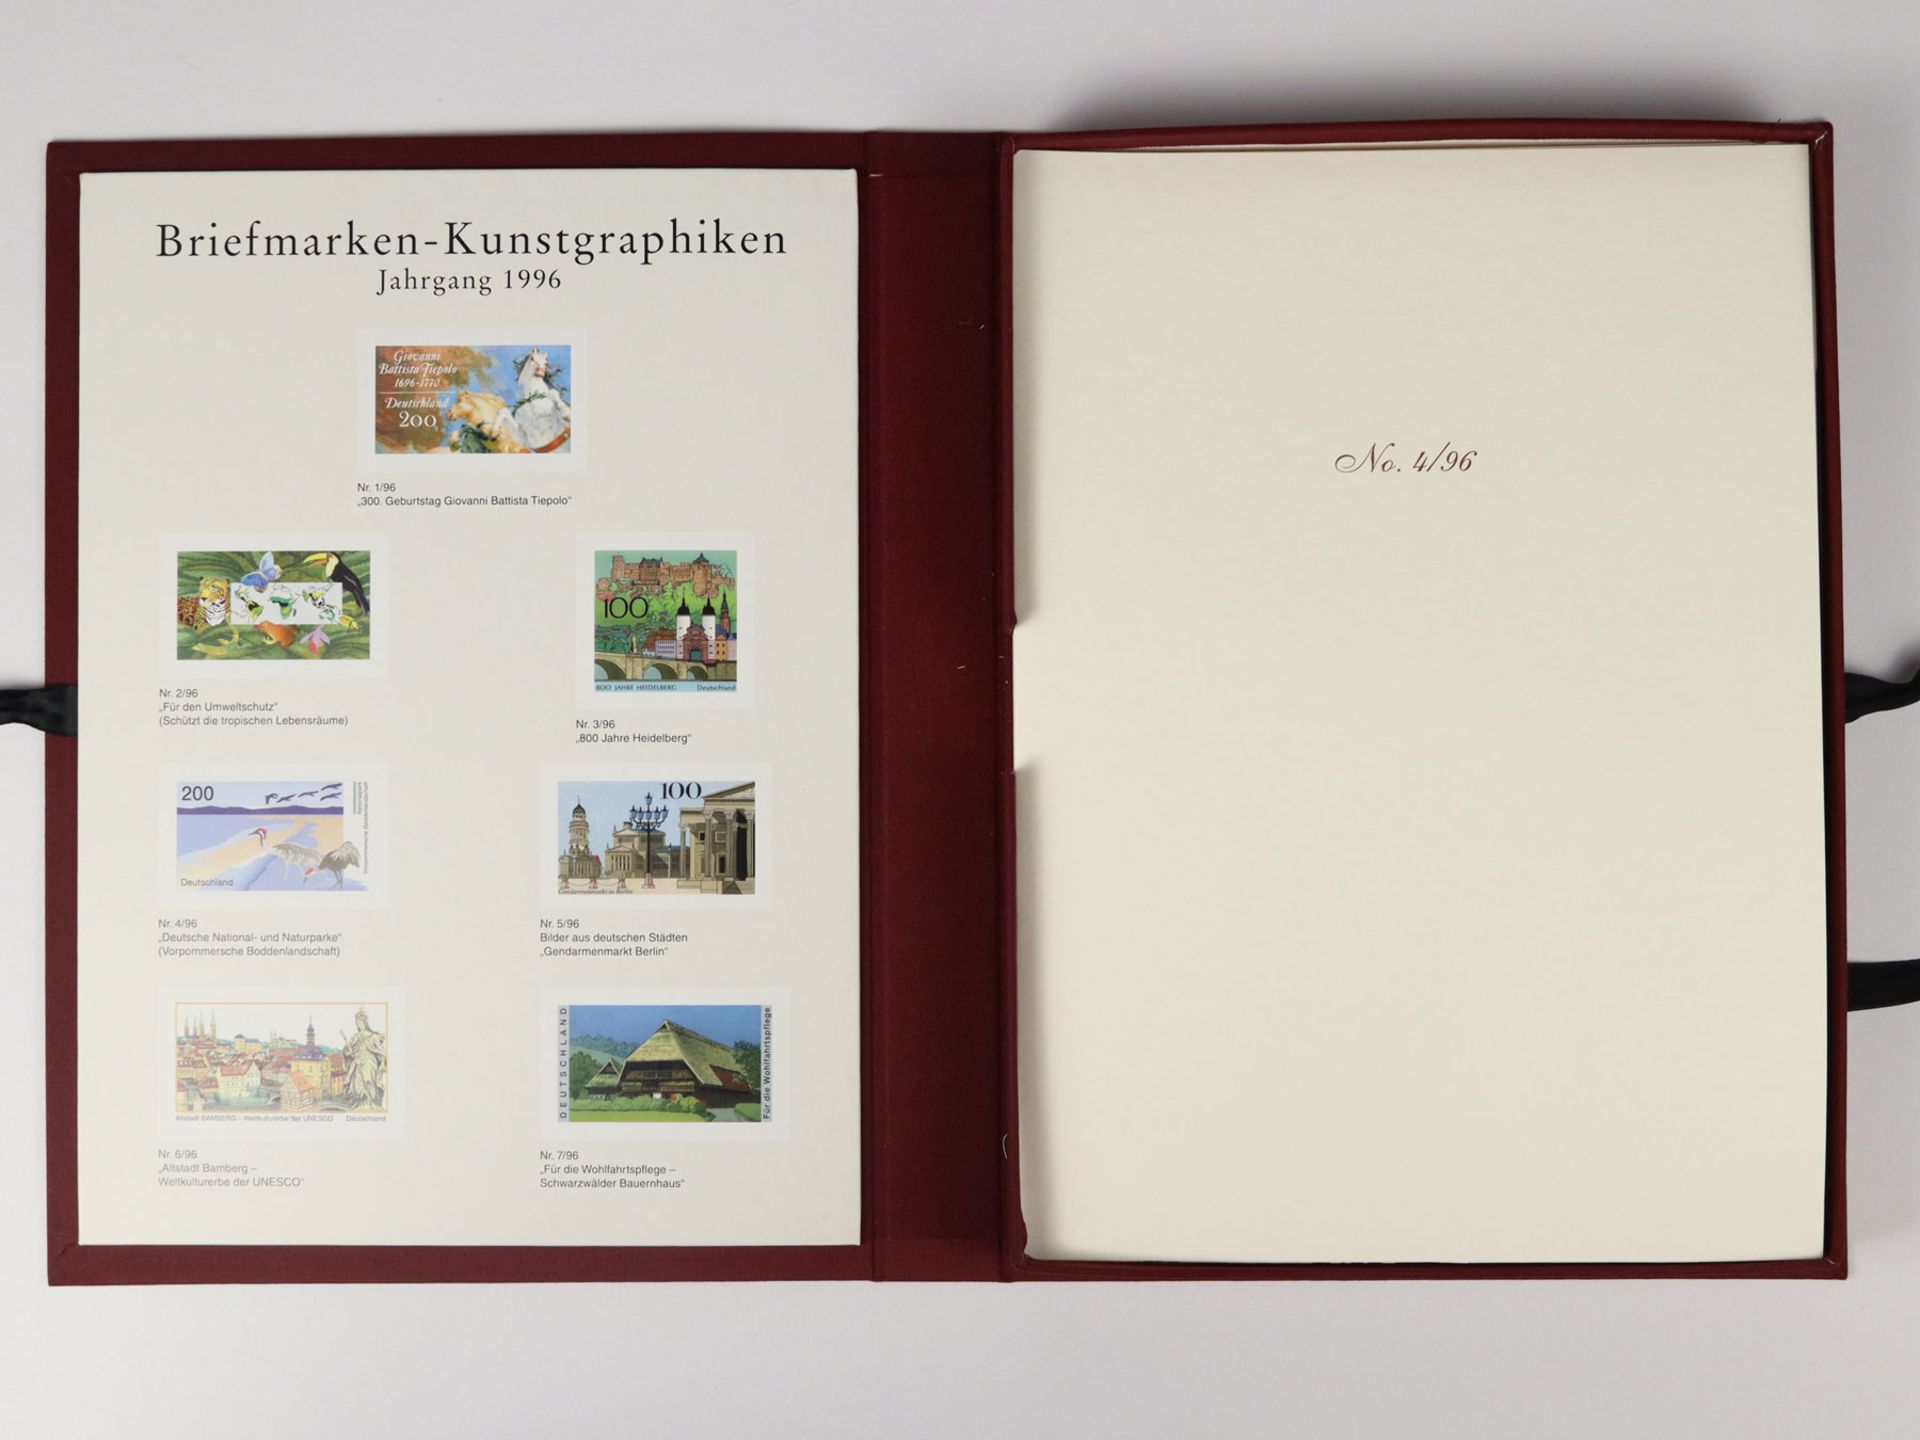 Briefmarken-Kunstgraphiken 1996